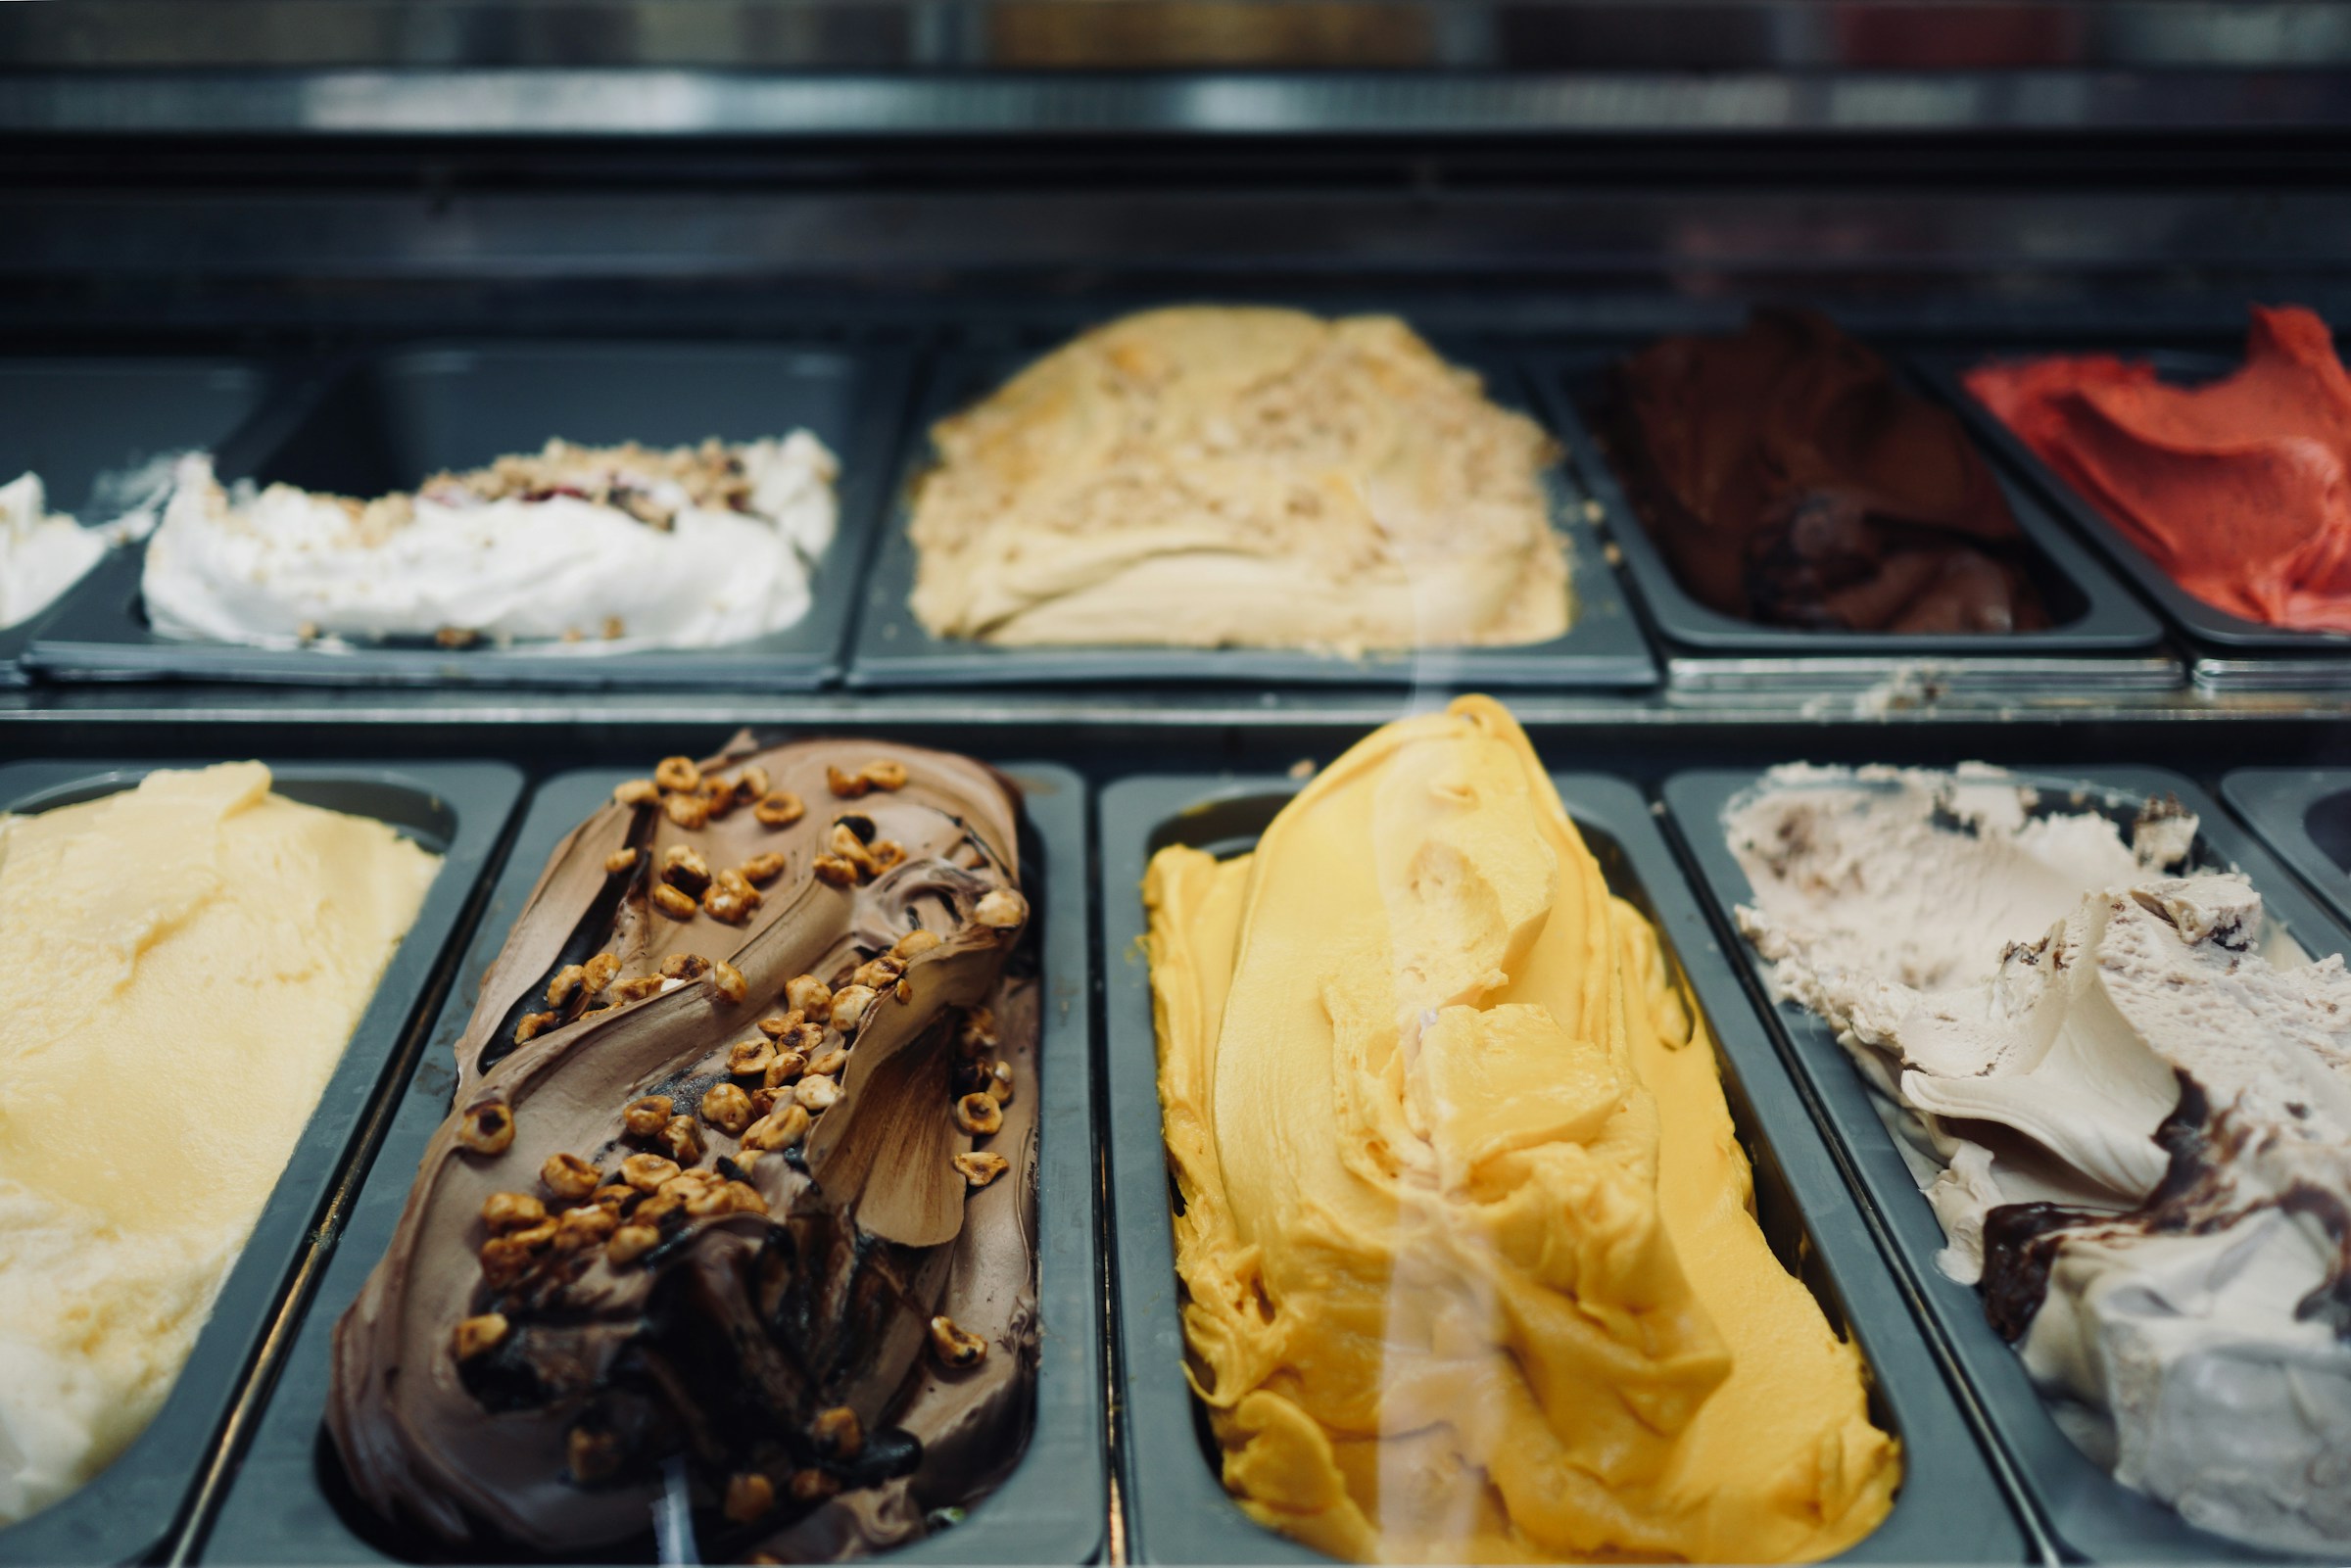 Different ice cream flavors | Source: Unsplash